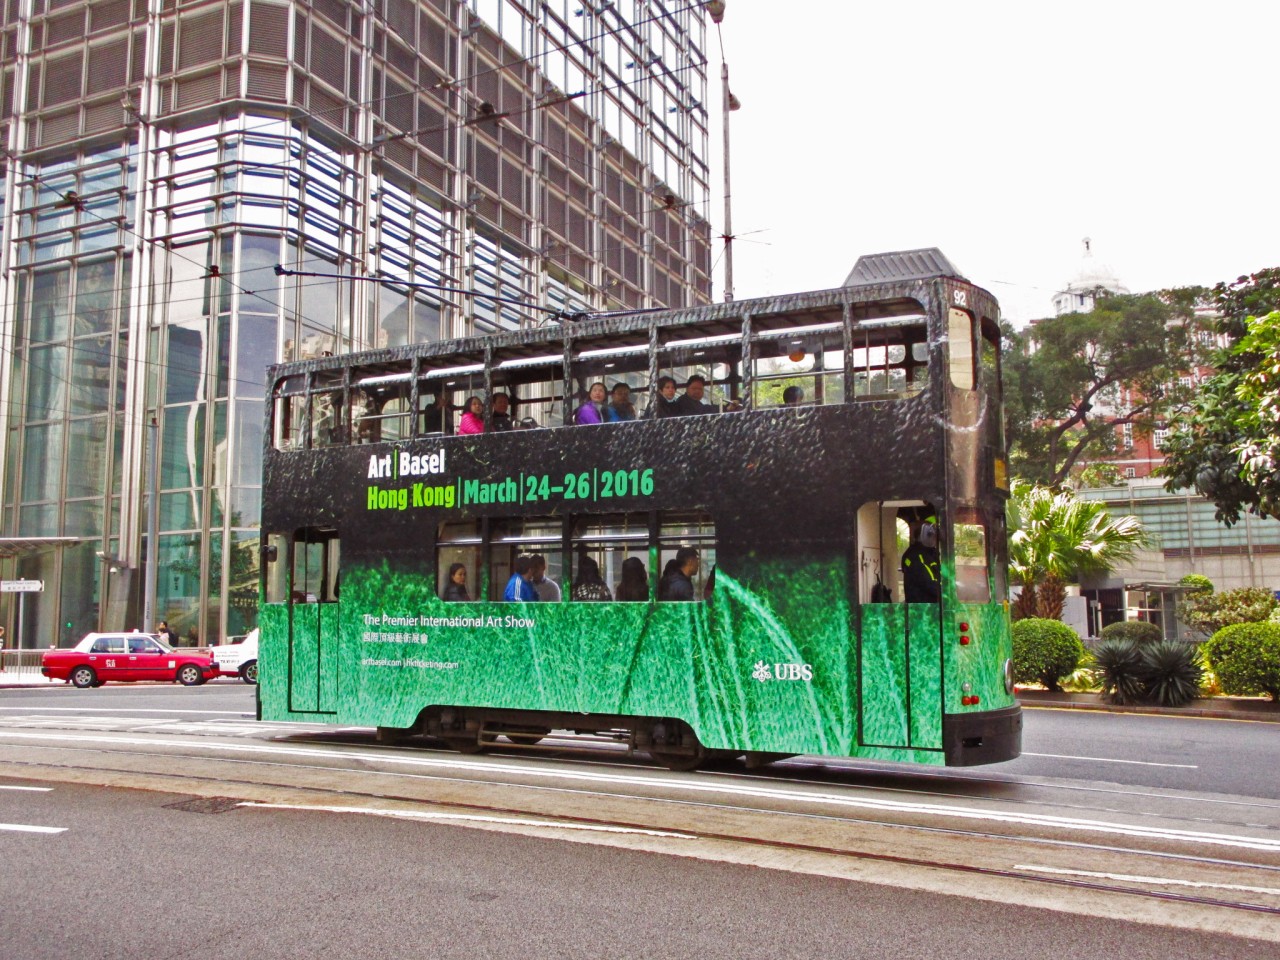 Bus in Hong Kong advertising the fairImage: Courtesy Art Basel